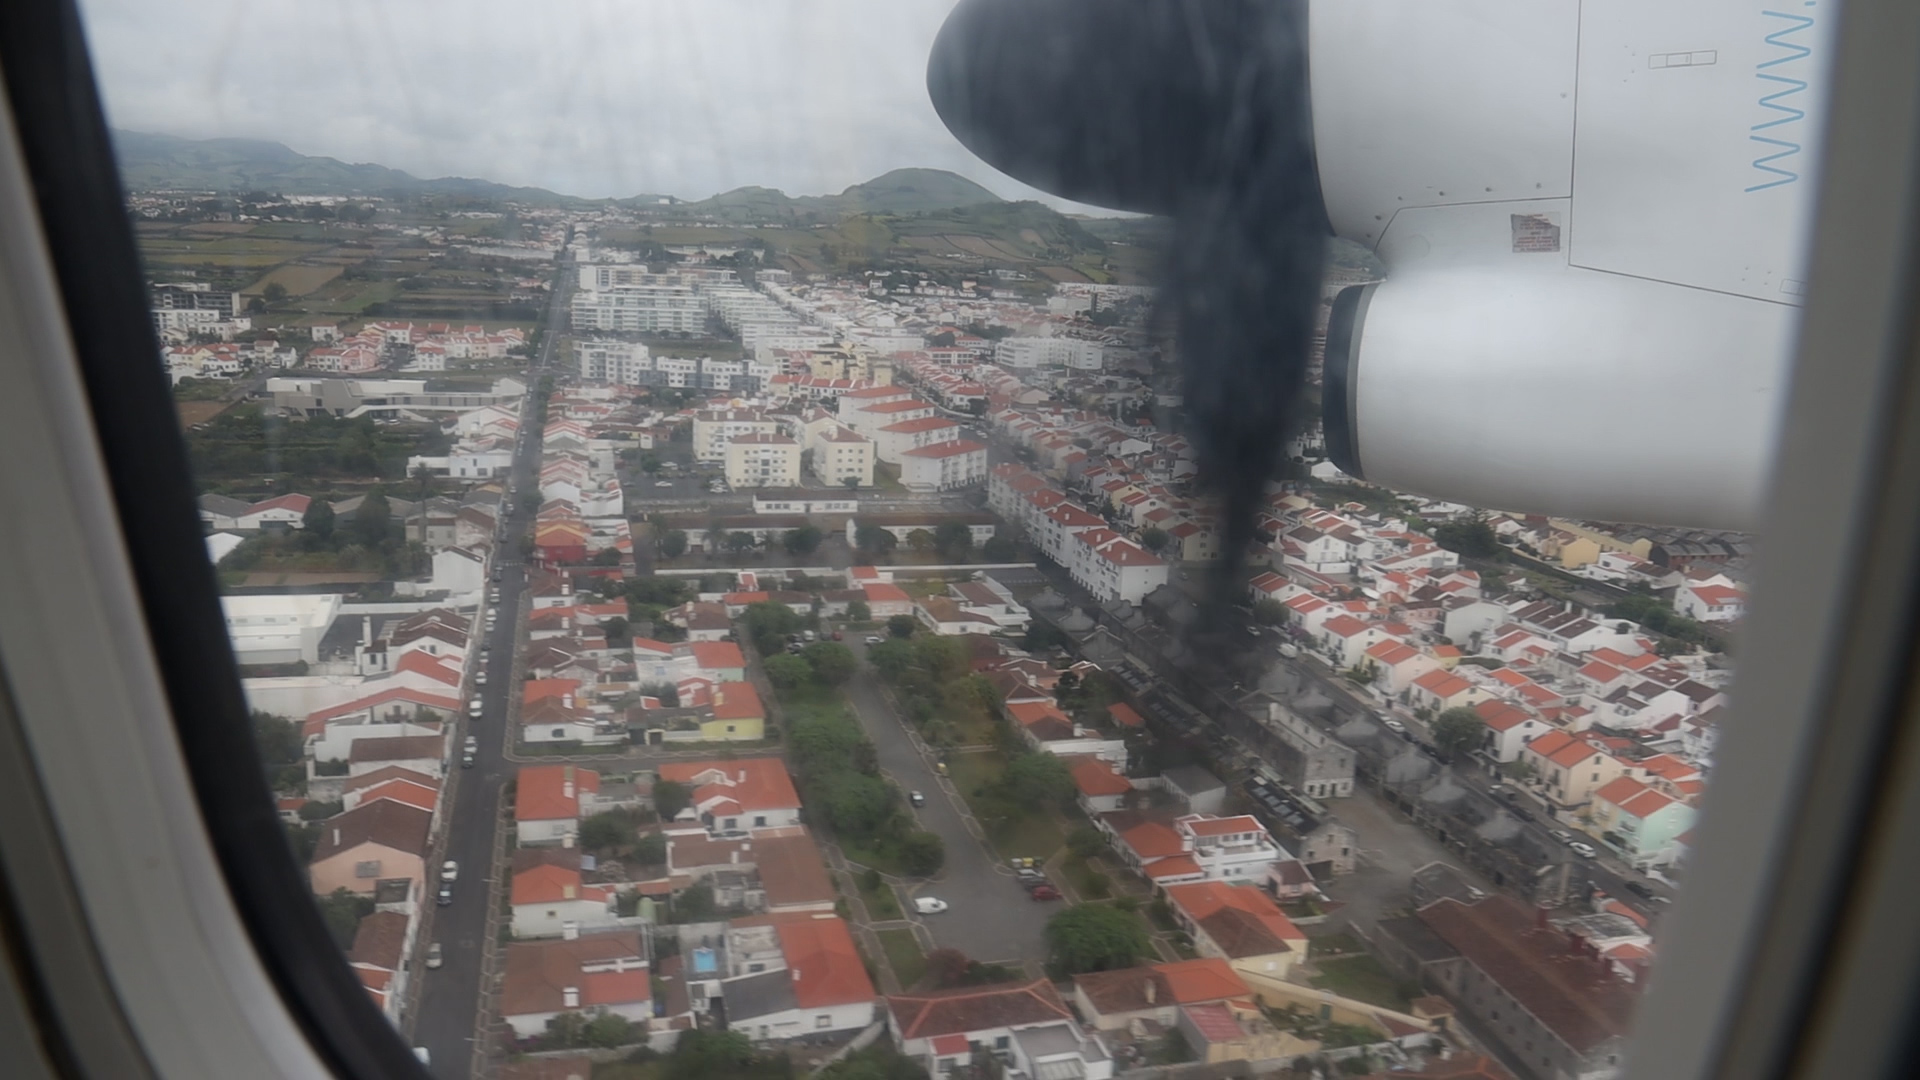 Anflug auf Ponta Delgada - Sao Miguel - Azoren